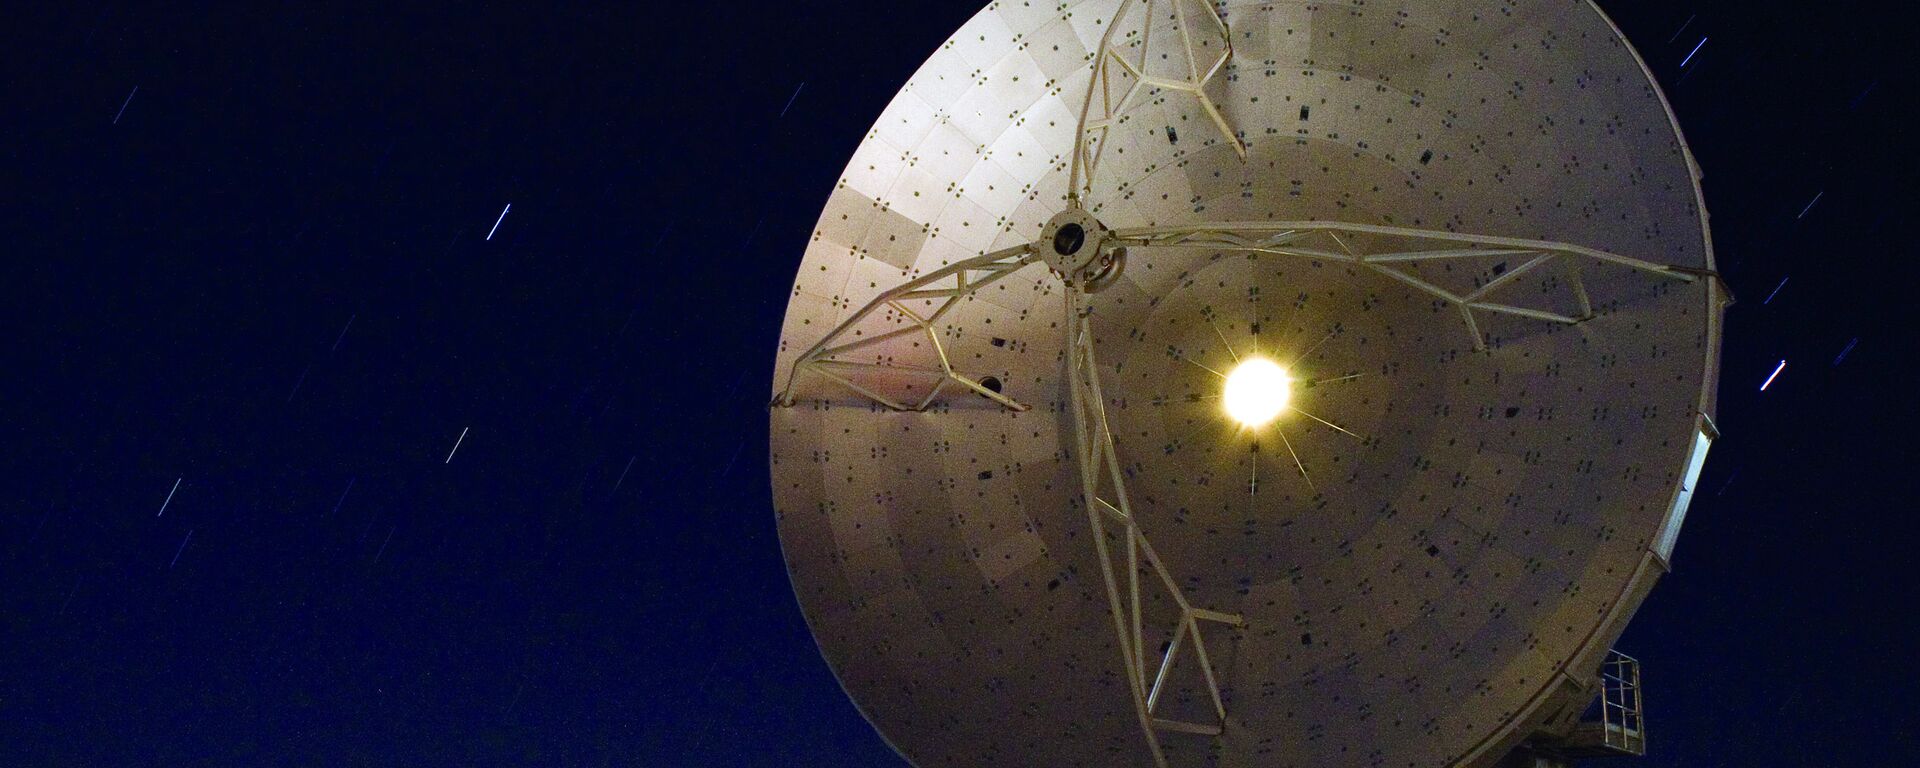 La antena del mayor radiotelescopio a nivel global ALMA - Sputnik Mundo, 1920, 19.01.2017